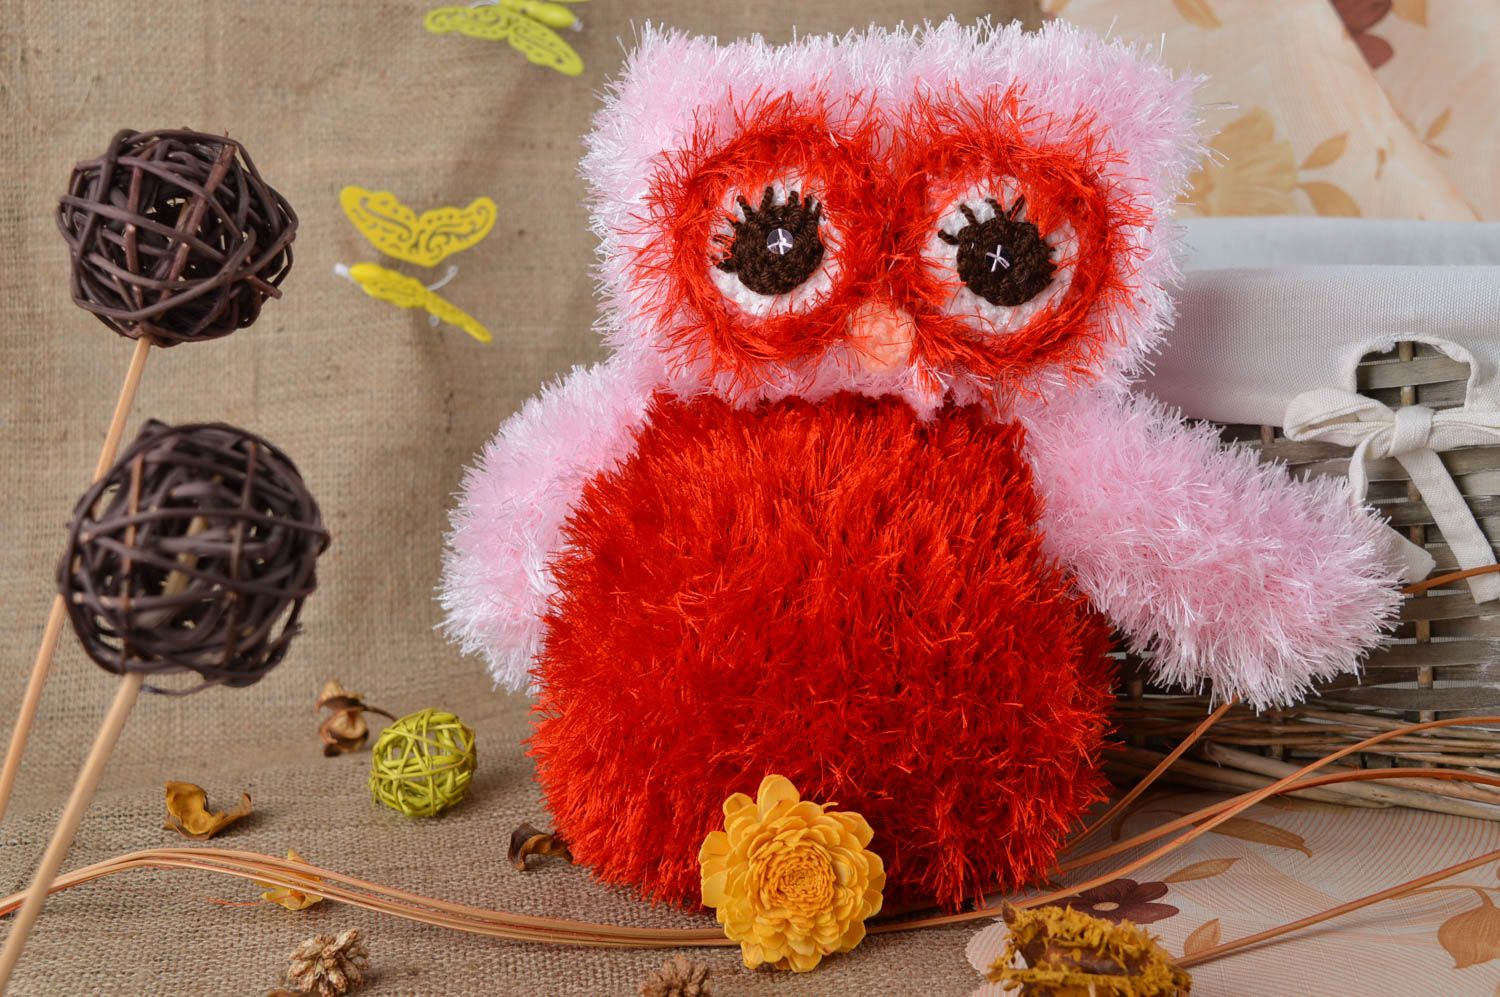 Handmade soft toy decorative stuffed toy gift for baby nursery decor ideas photo 1